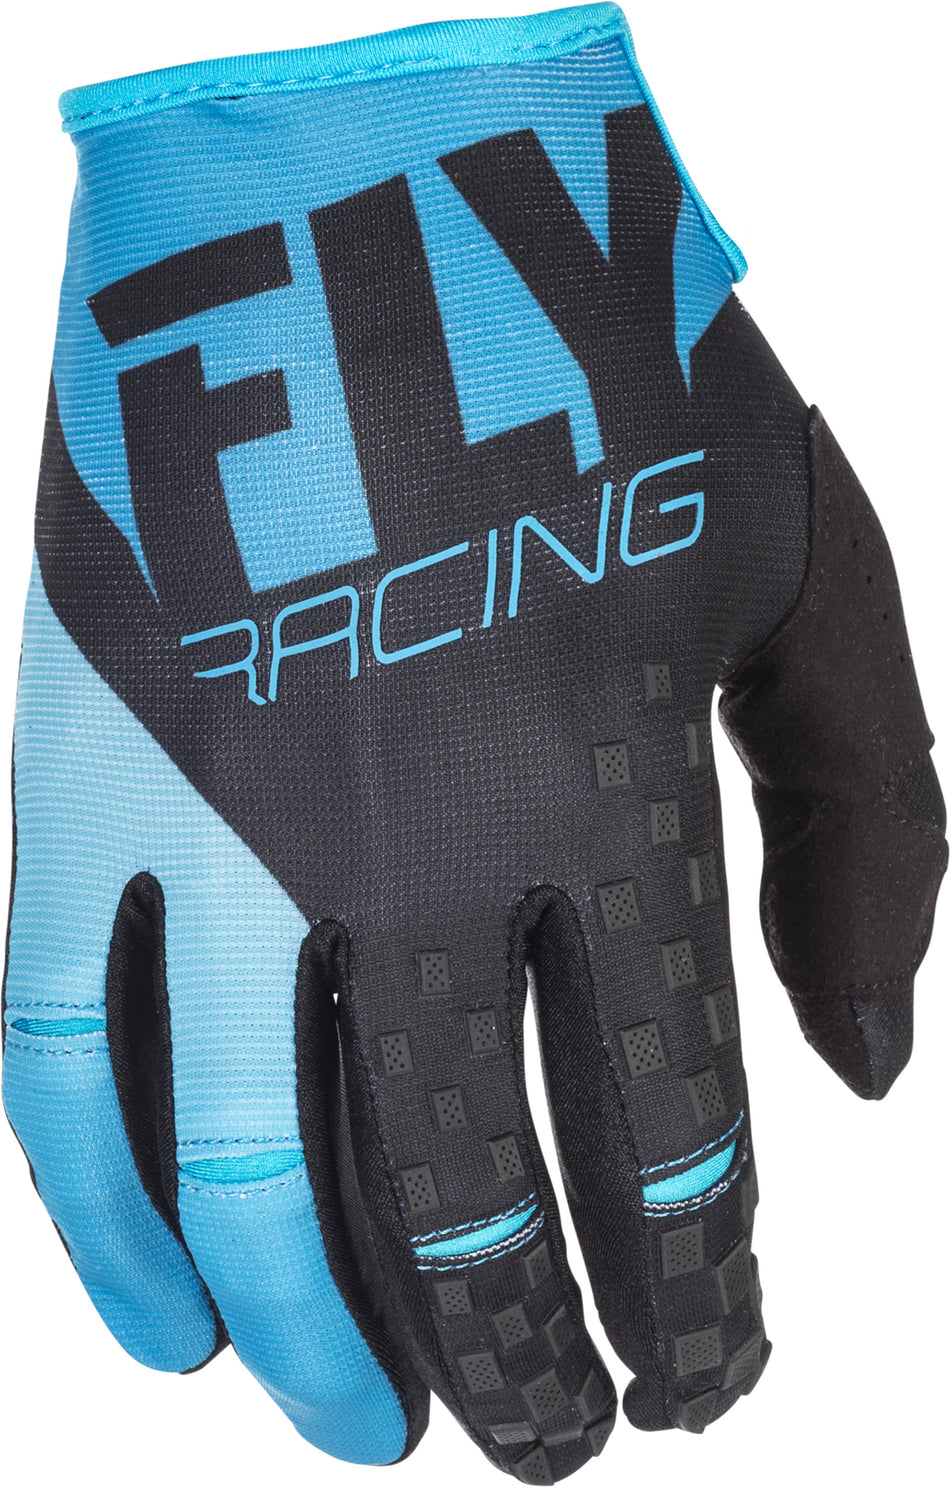 FLY RACING Kinetic Gloves Blue/Black Sz 10 371-41110